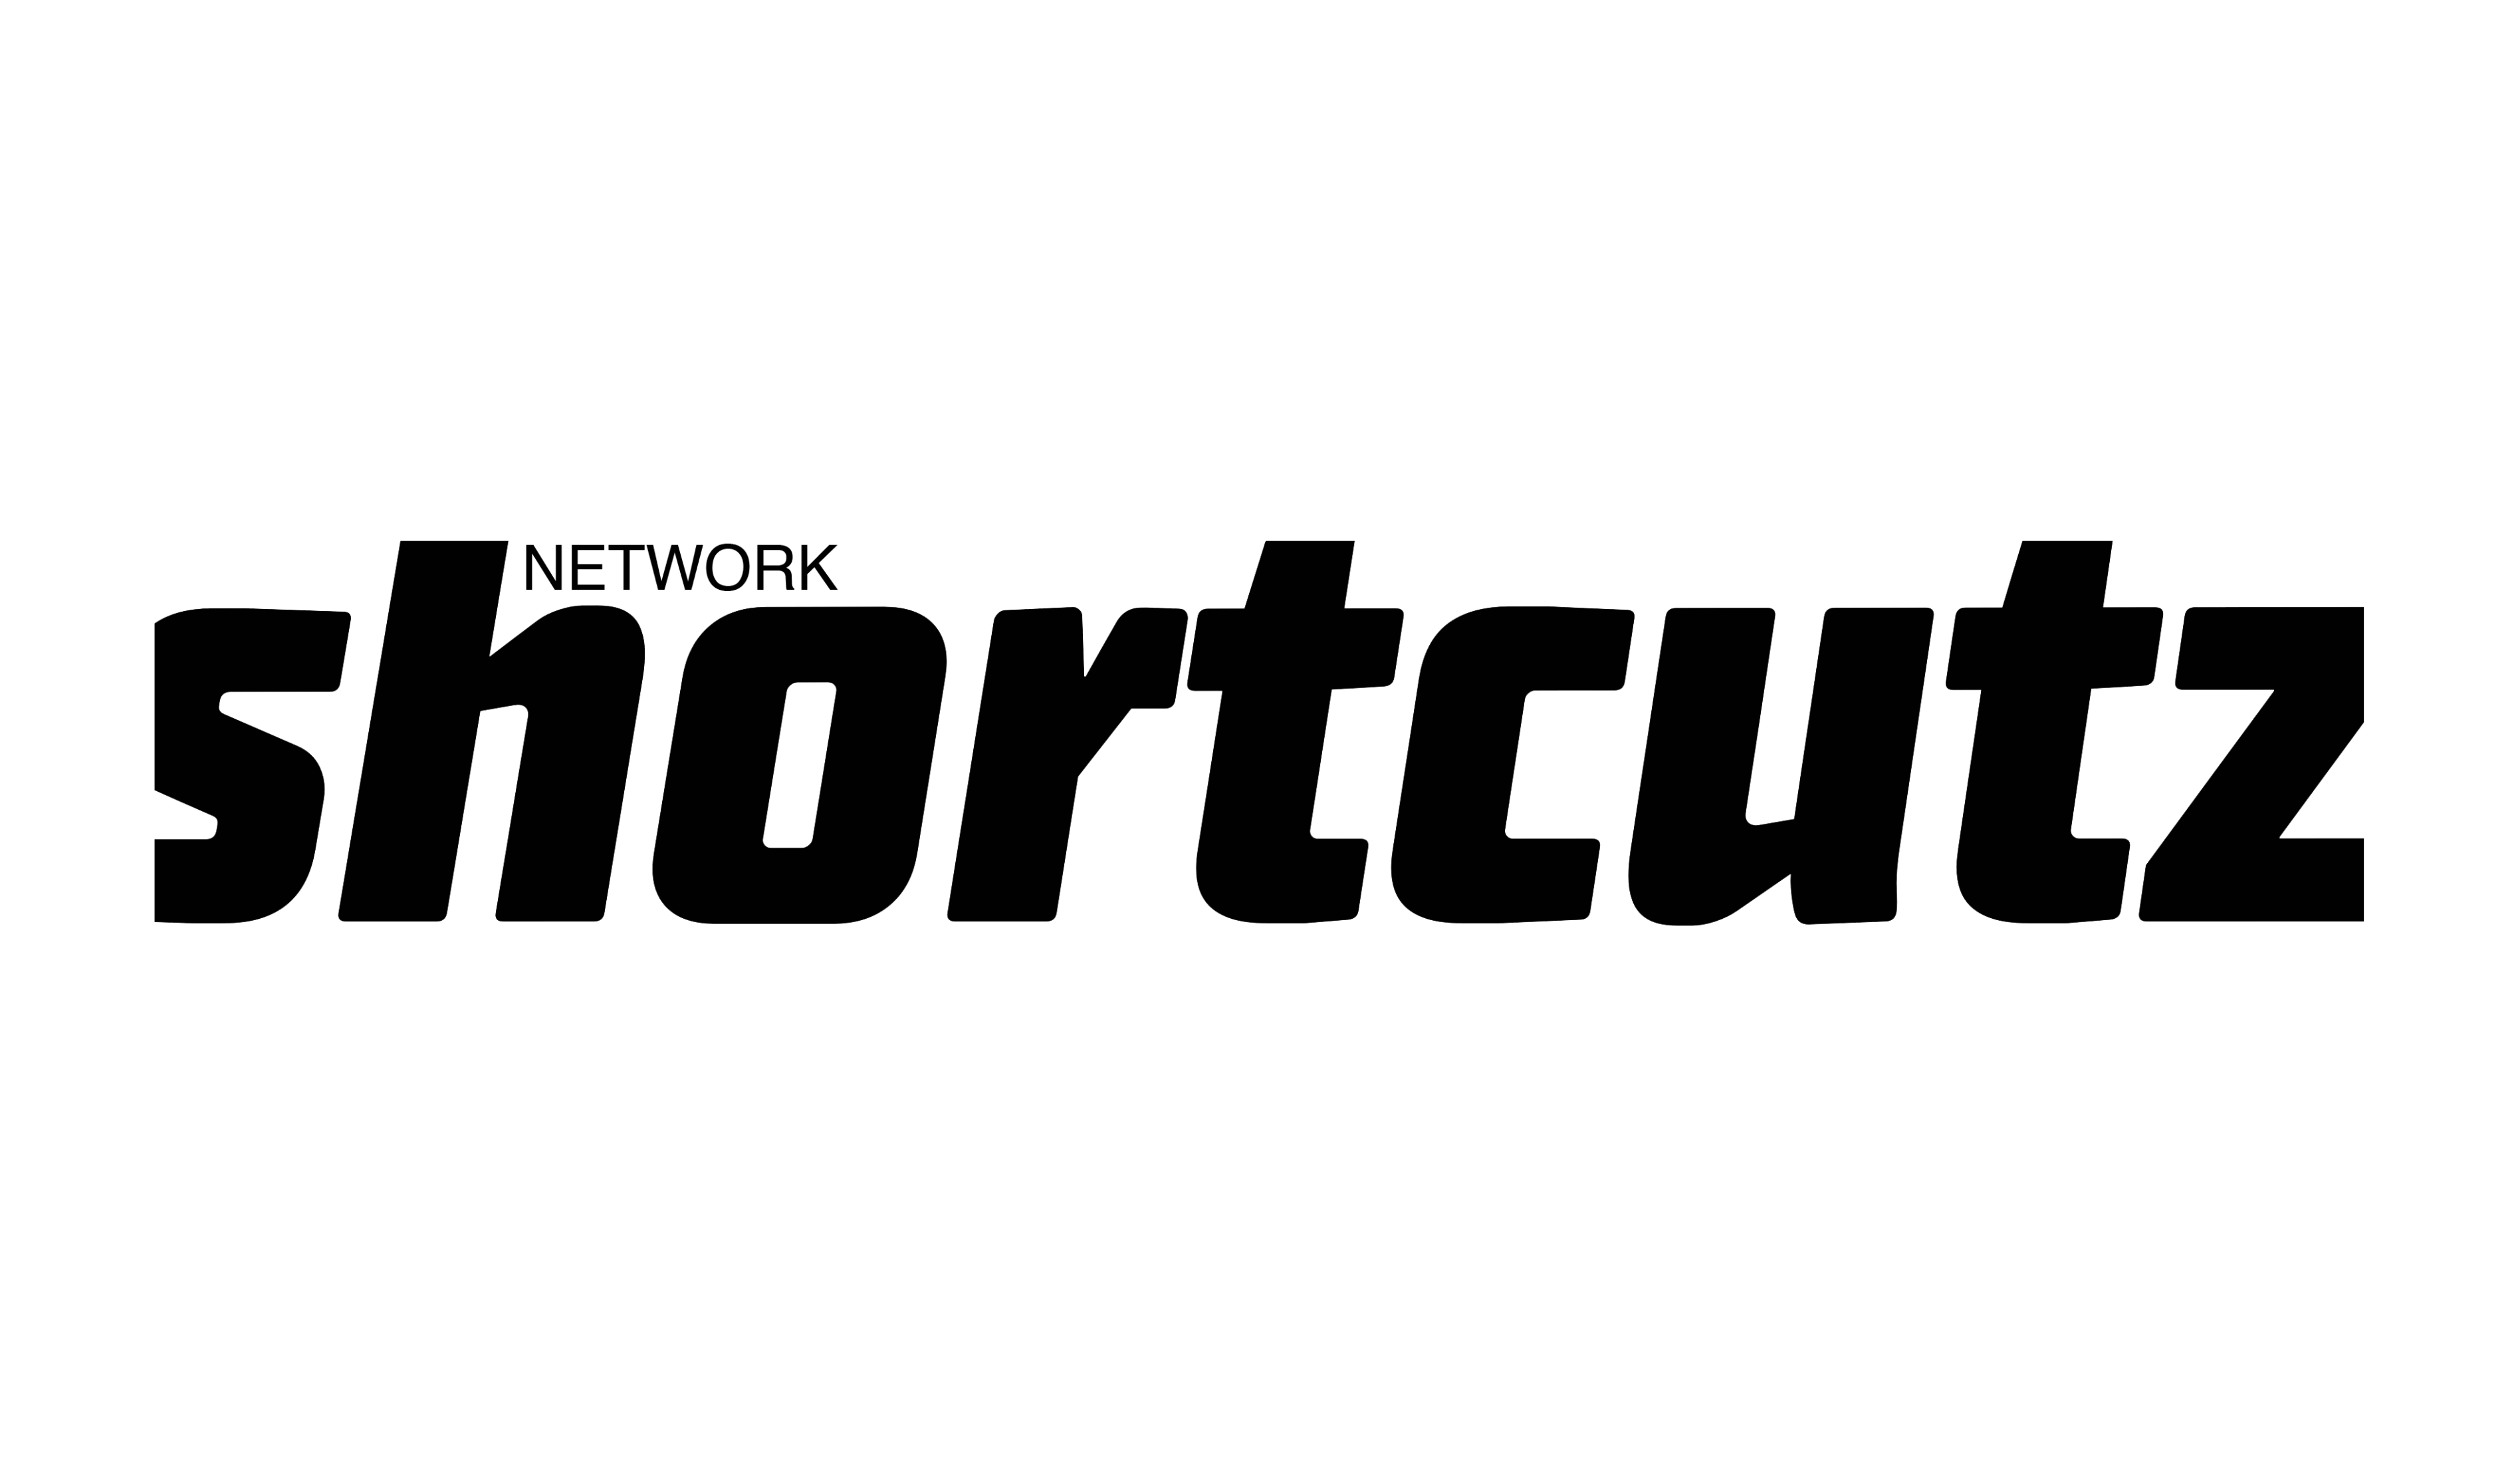 SHORTCUTZ-NETWORK-logo-black-background.png